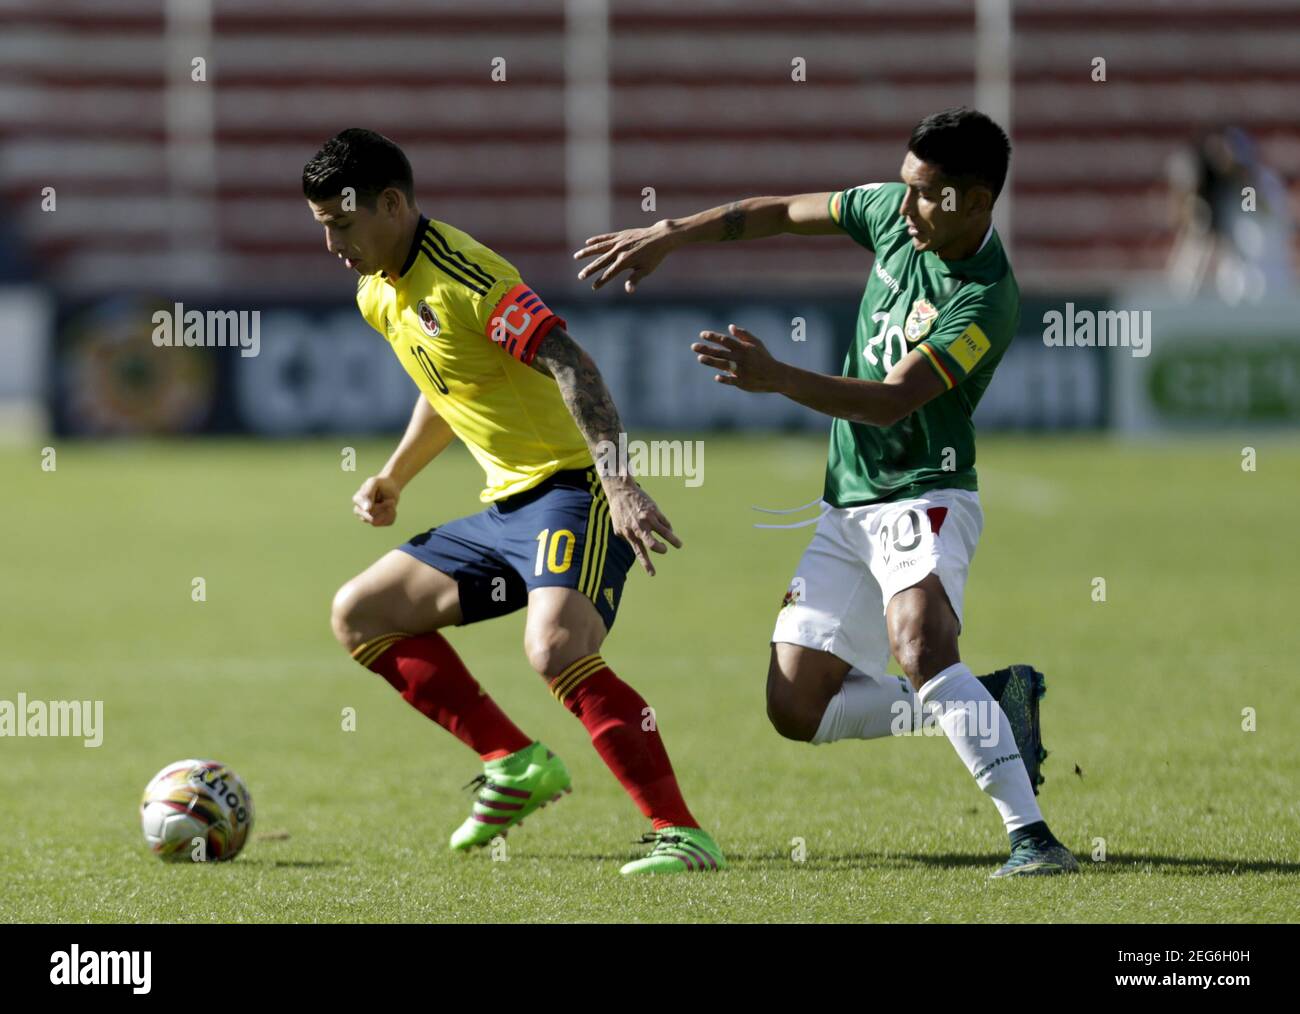 Calcio Calcio - Campionati Mondiali - Bolivia / Colombia - Stadio Hernando  Siles - la Paz, Bolivia 24/3/16. Rudy